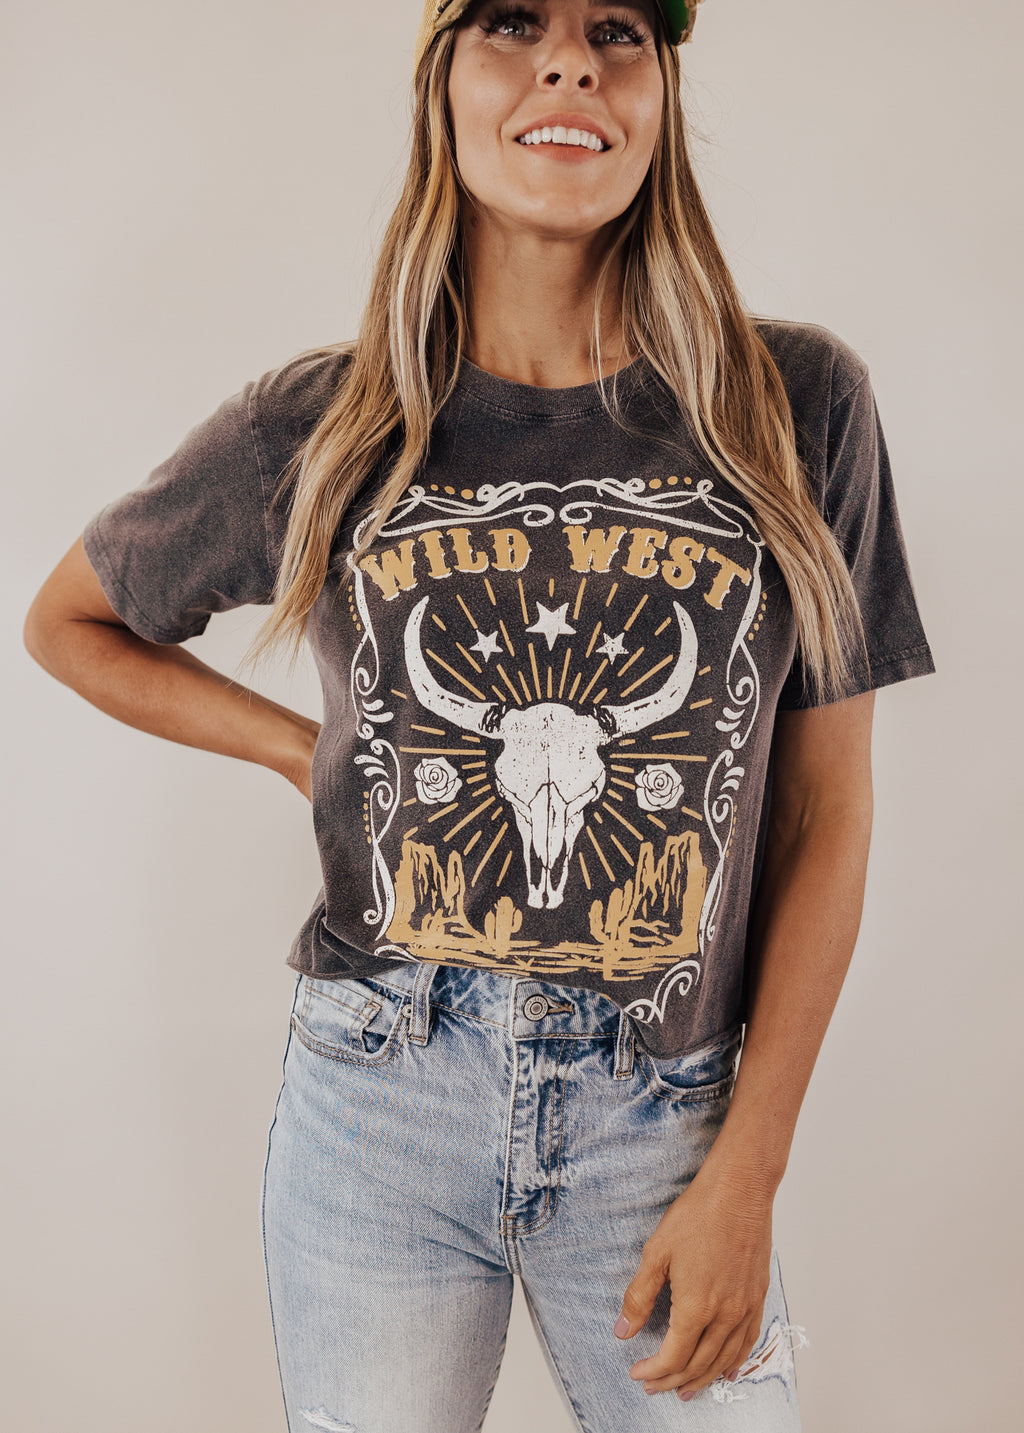 #86 Wild West Rodeo Crop Top *VINTAGE BLACK